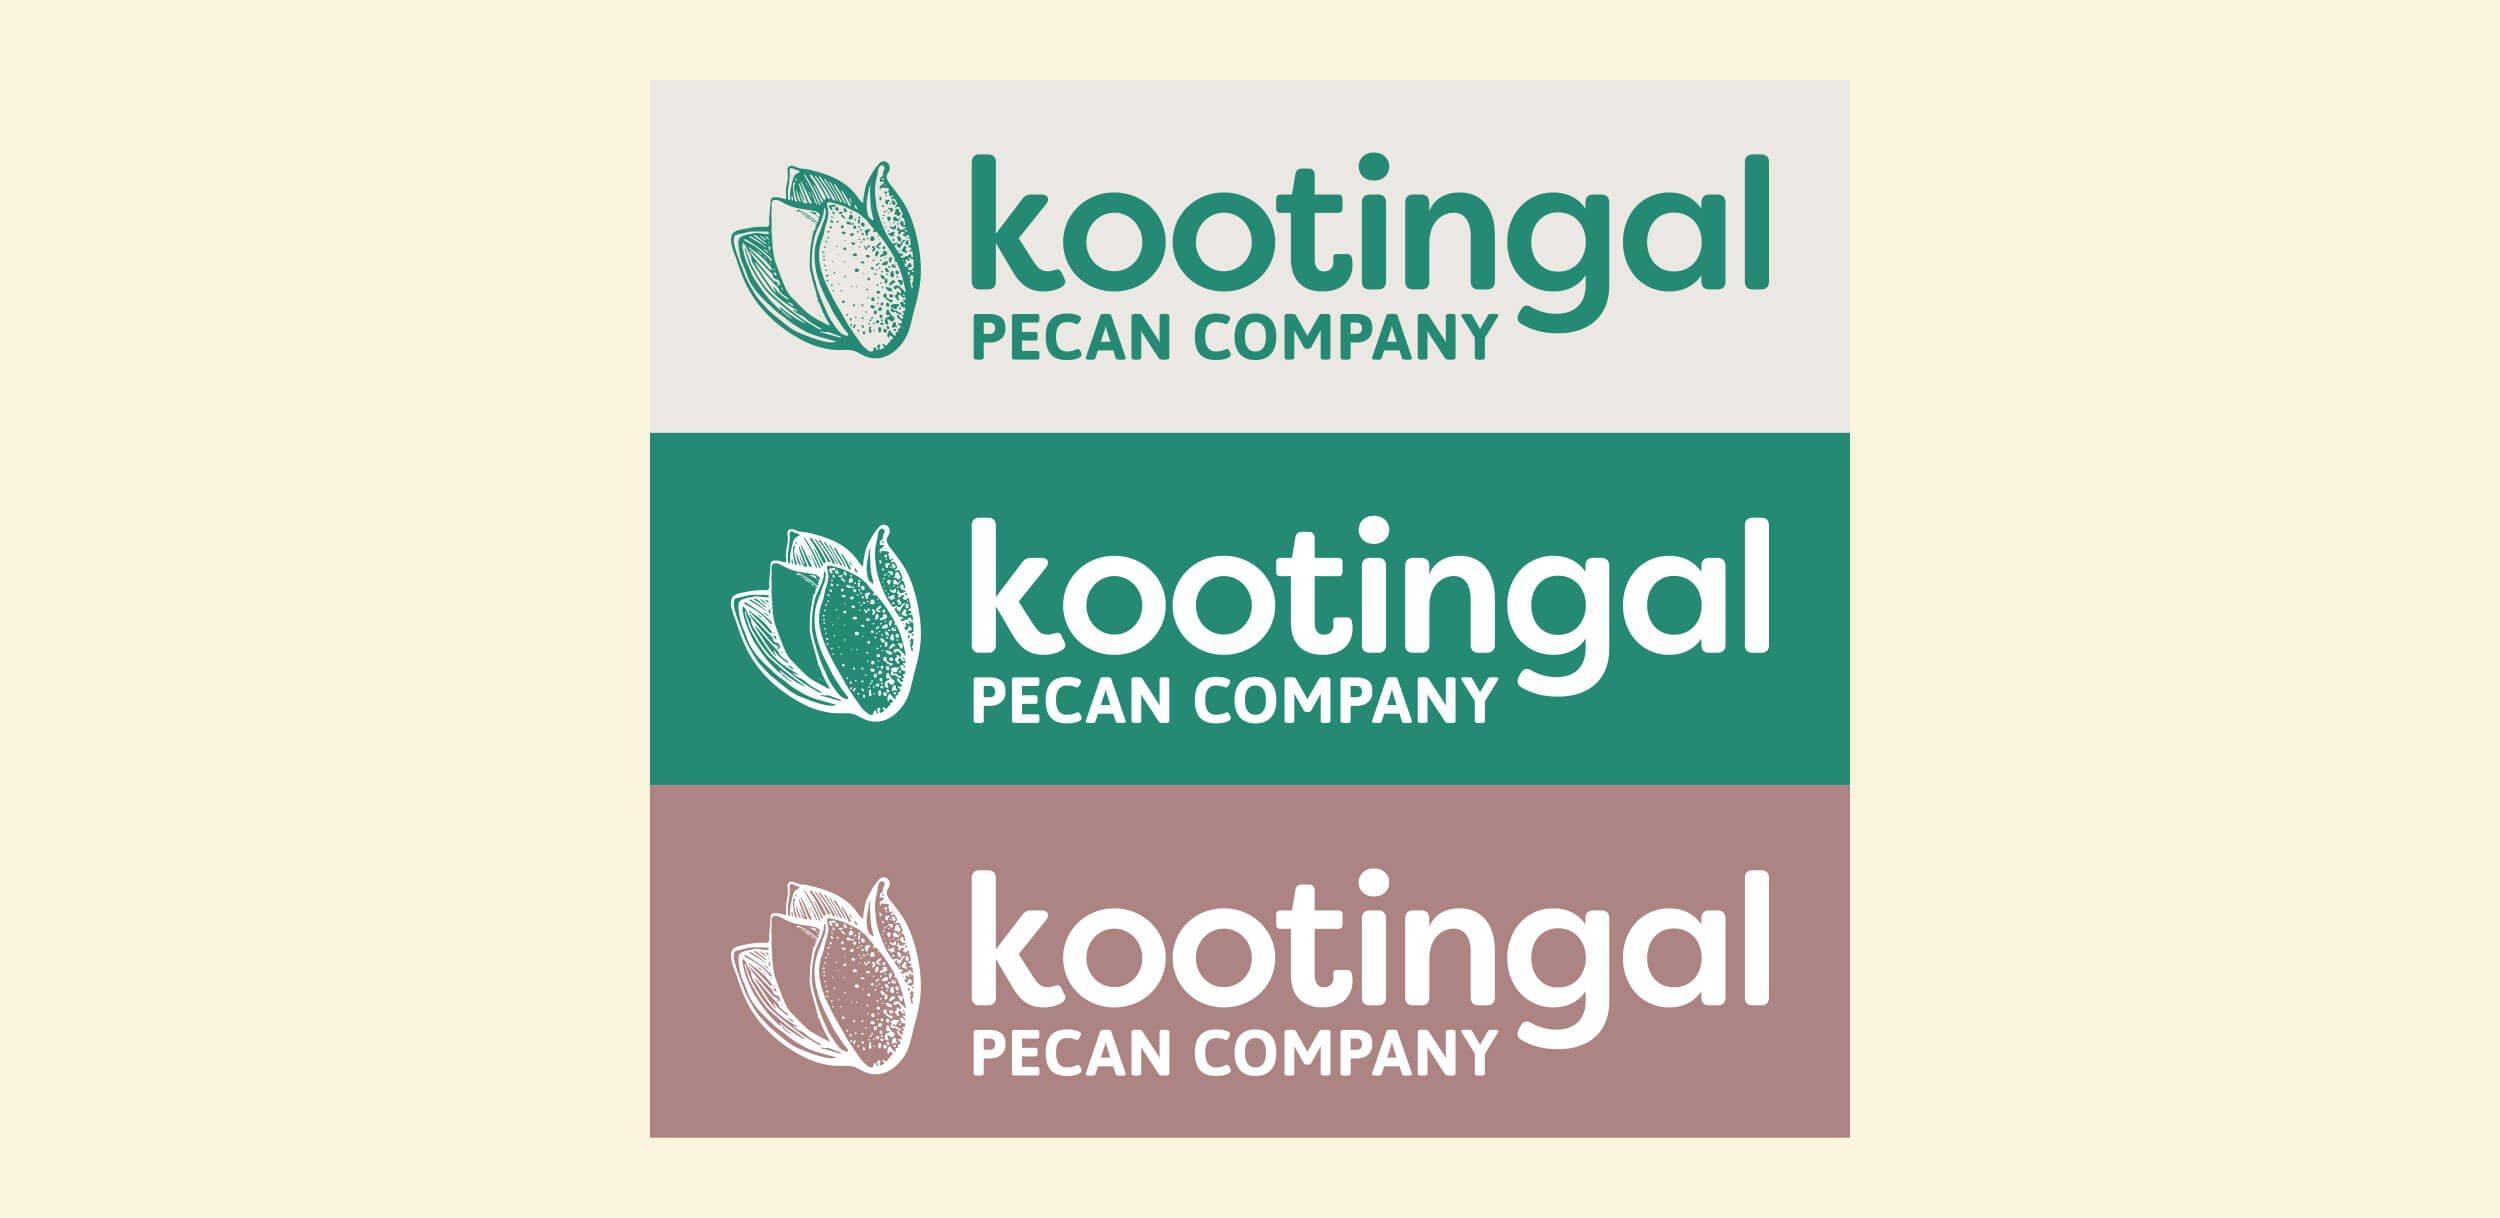 Colour options for the Kootingal Pecan Company logo